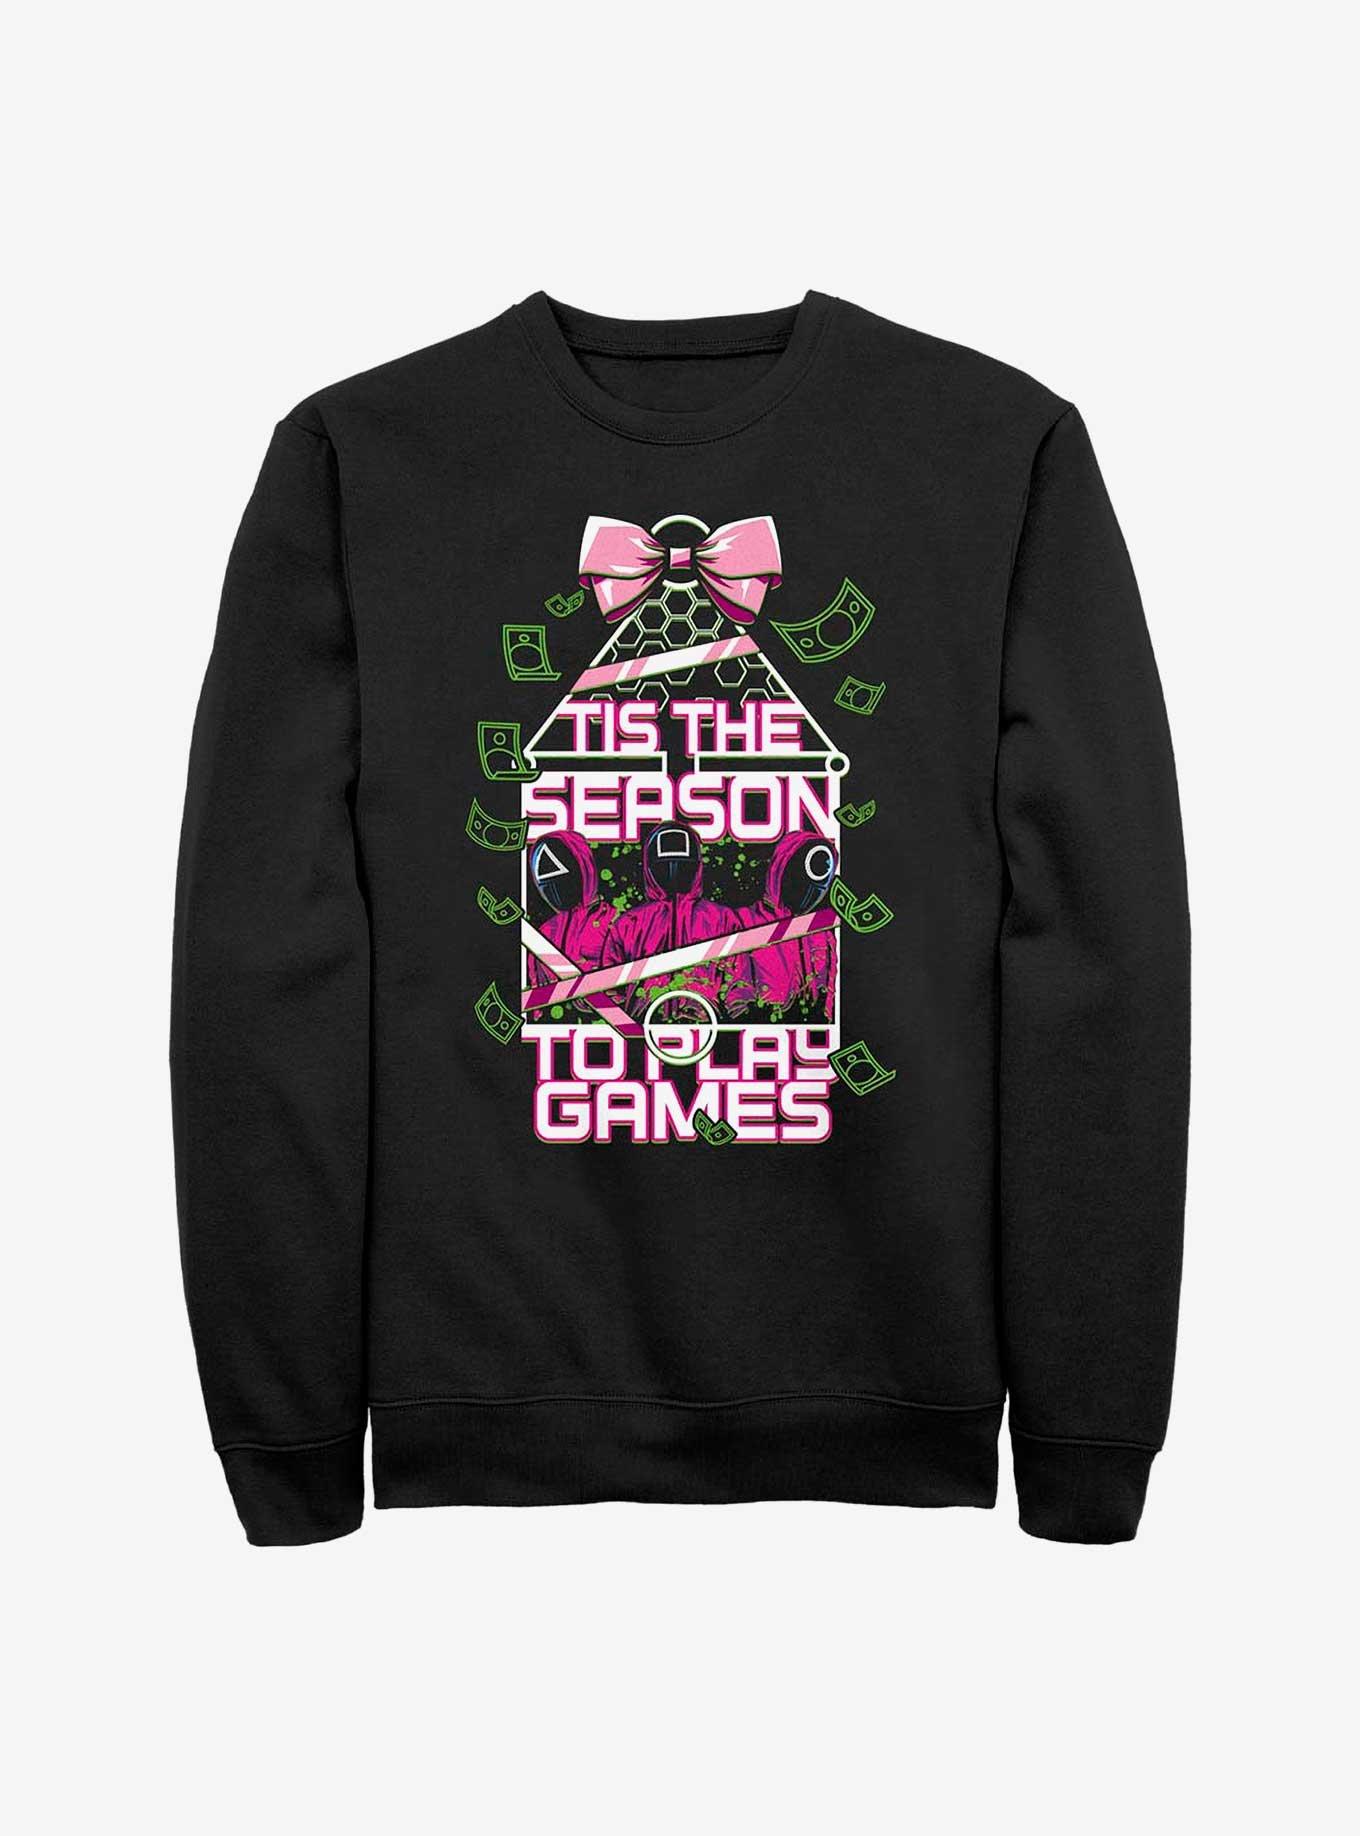 Squid Game Tis The Season To Play Games Sweatshirt, BLACK, hi-res